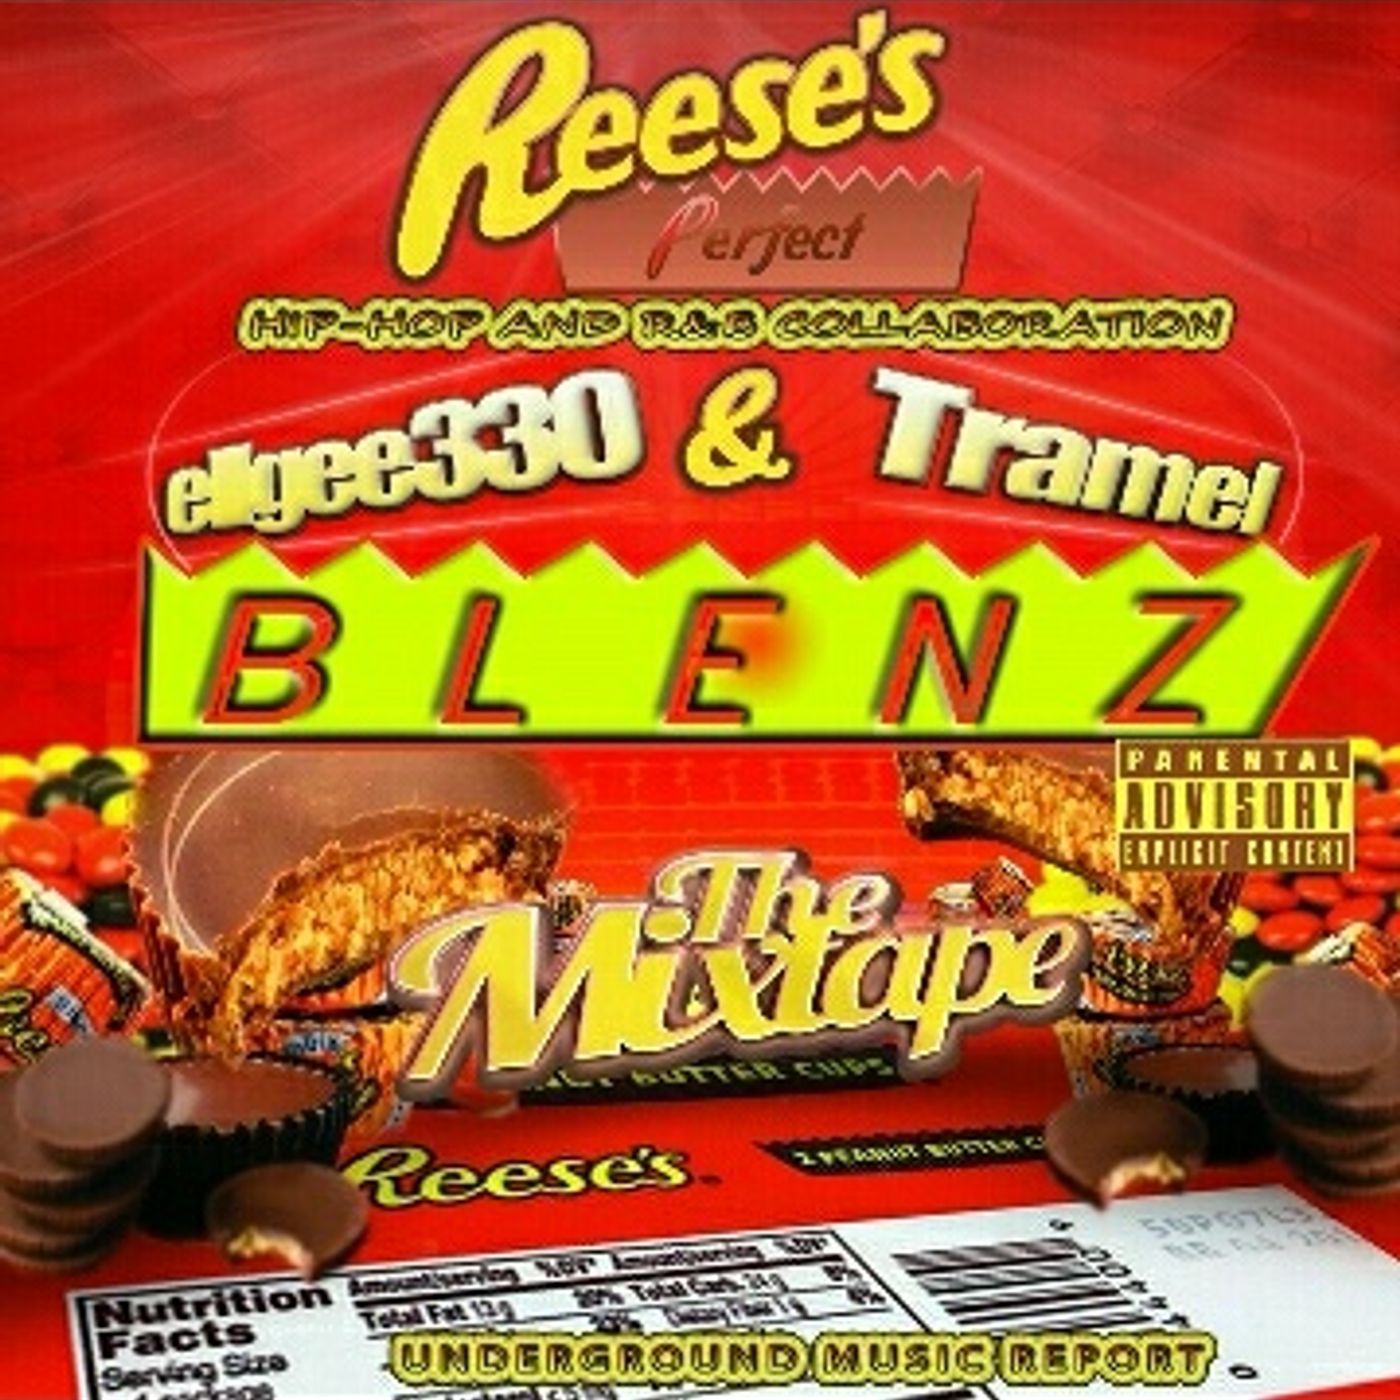 BLENZ "Reese's Perfect" The Mixtape